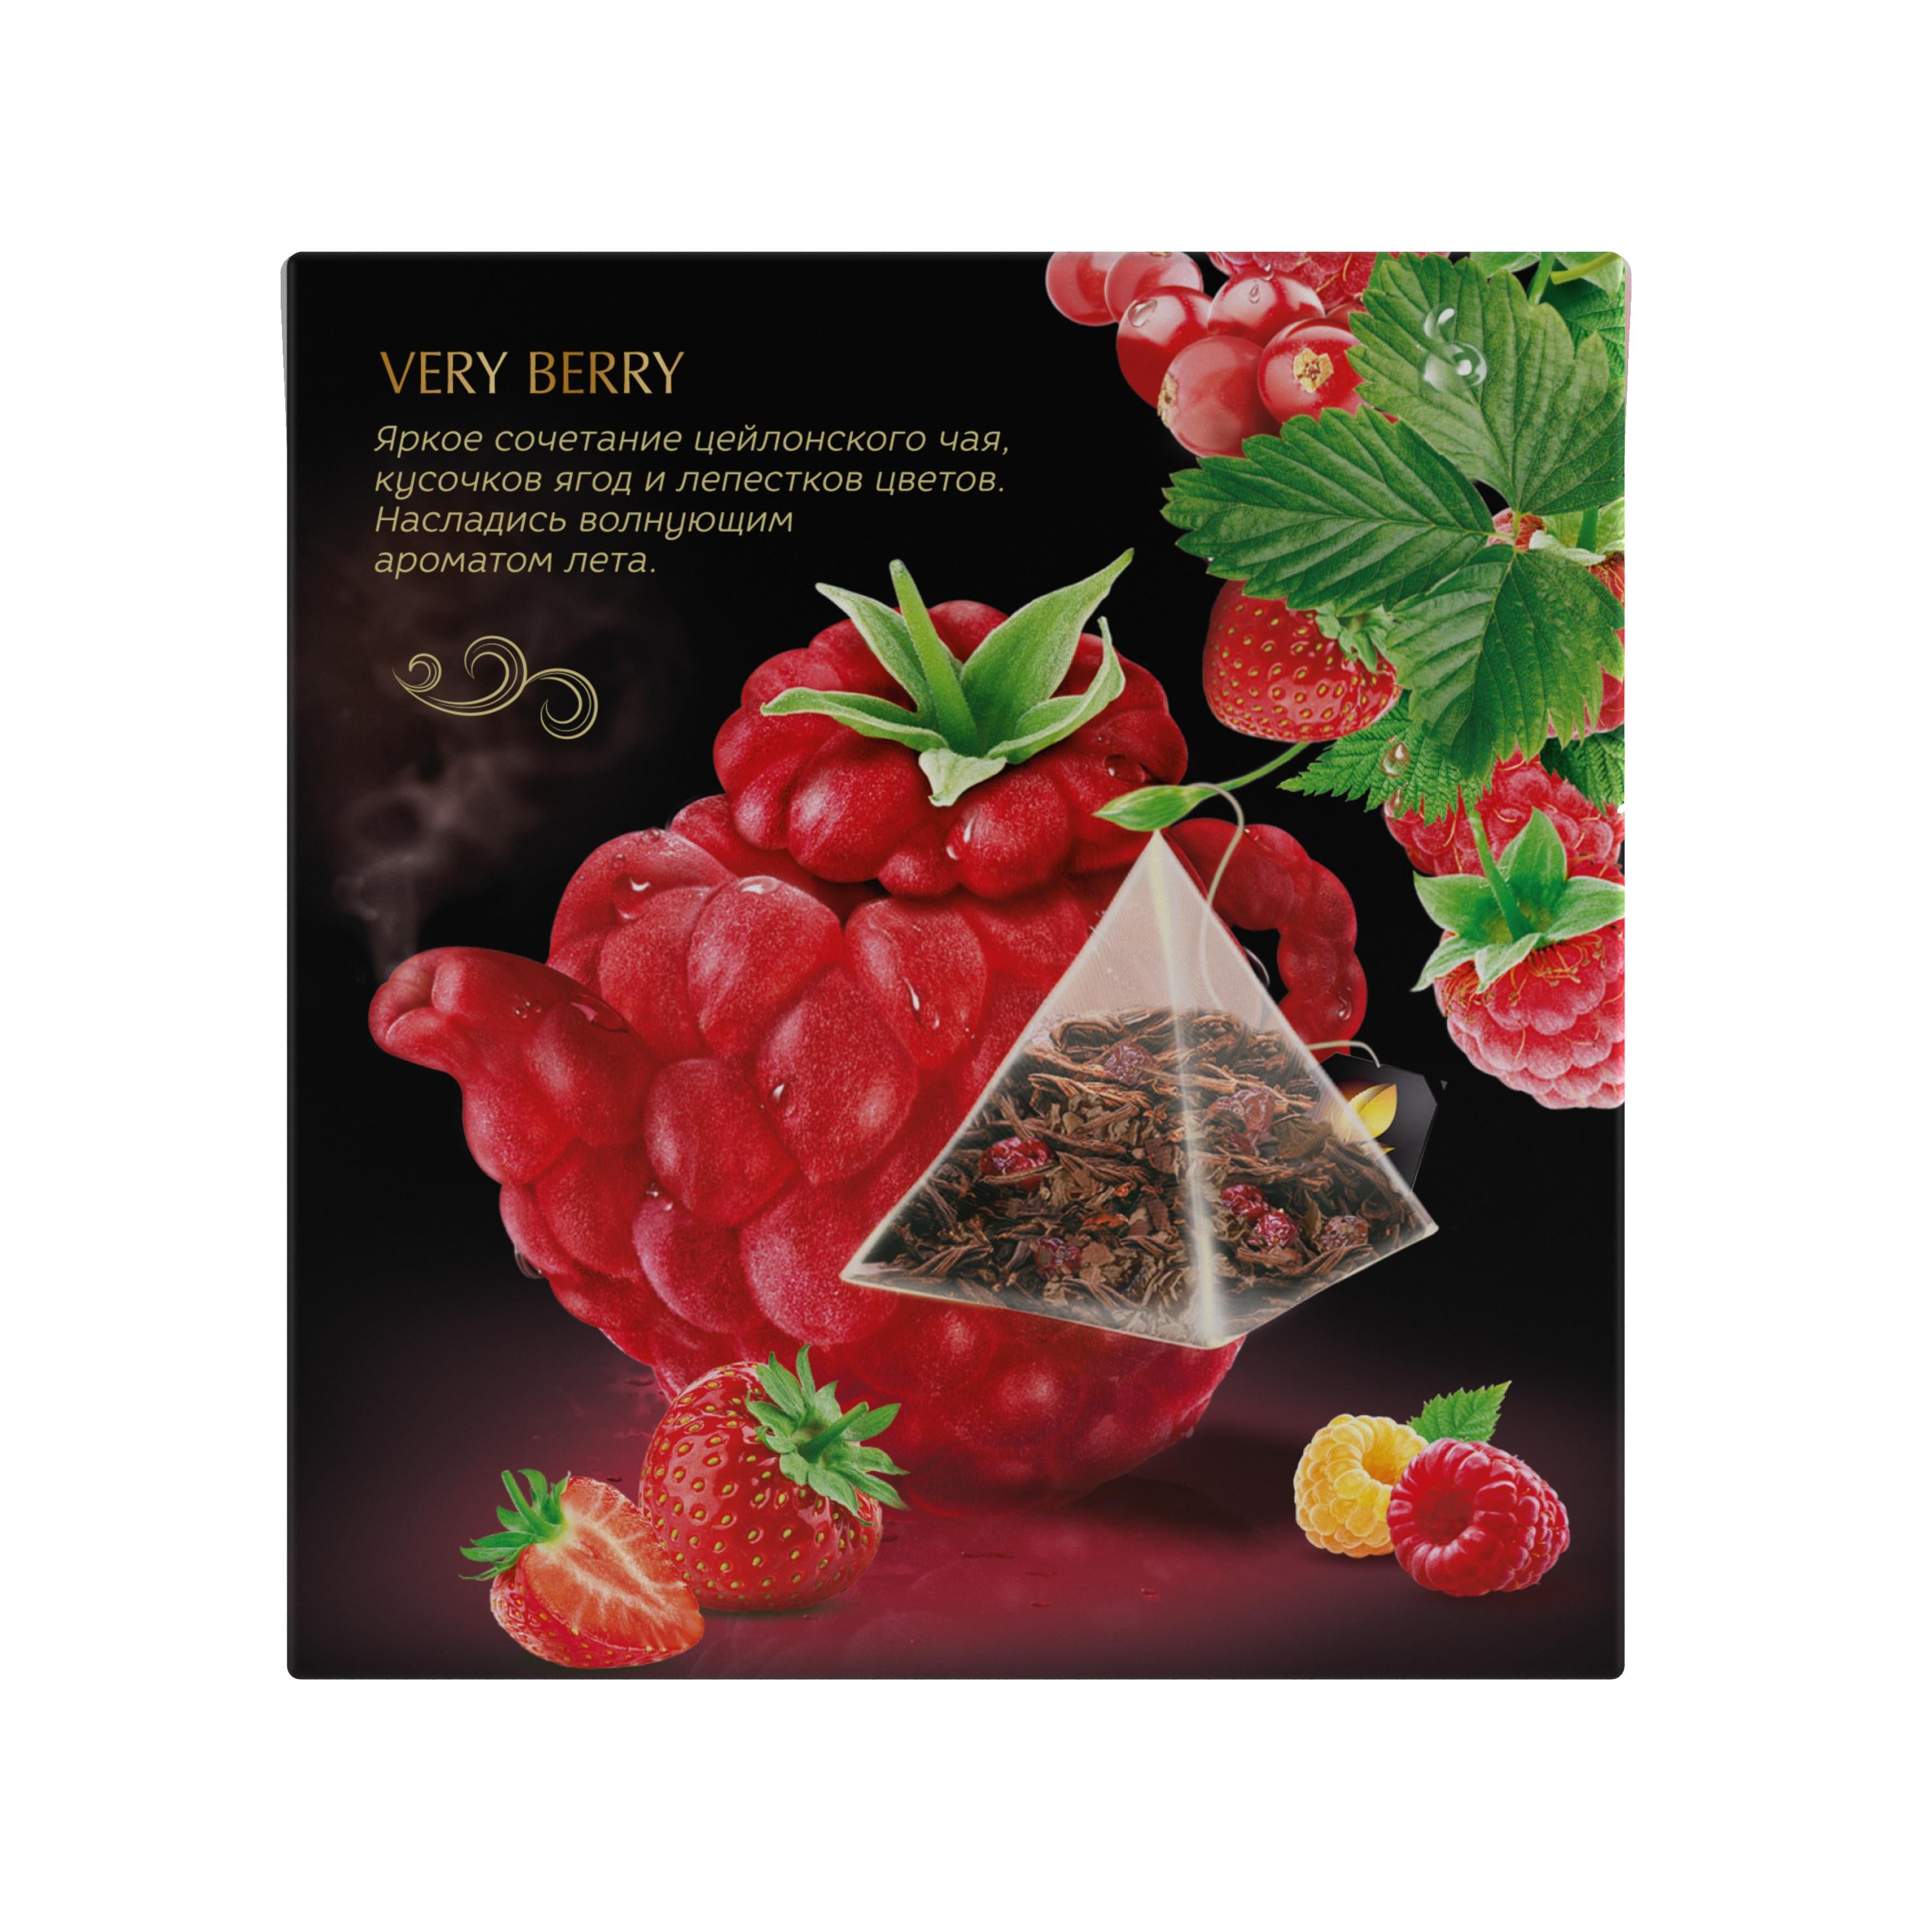 Very Berry, flavoured black tea in pyramids 20х1,7g